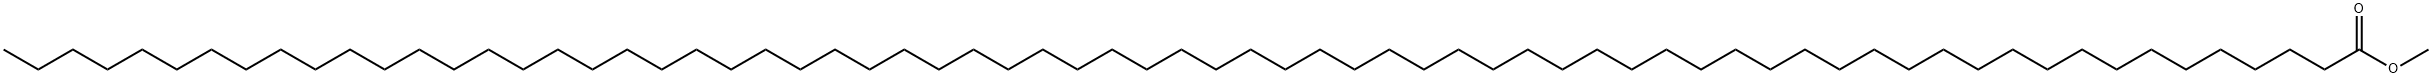 Nonahexacontanoic acid methyl ester|